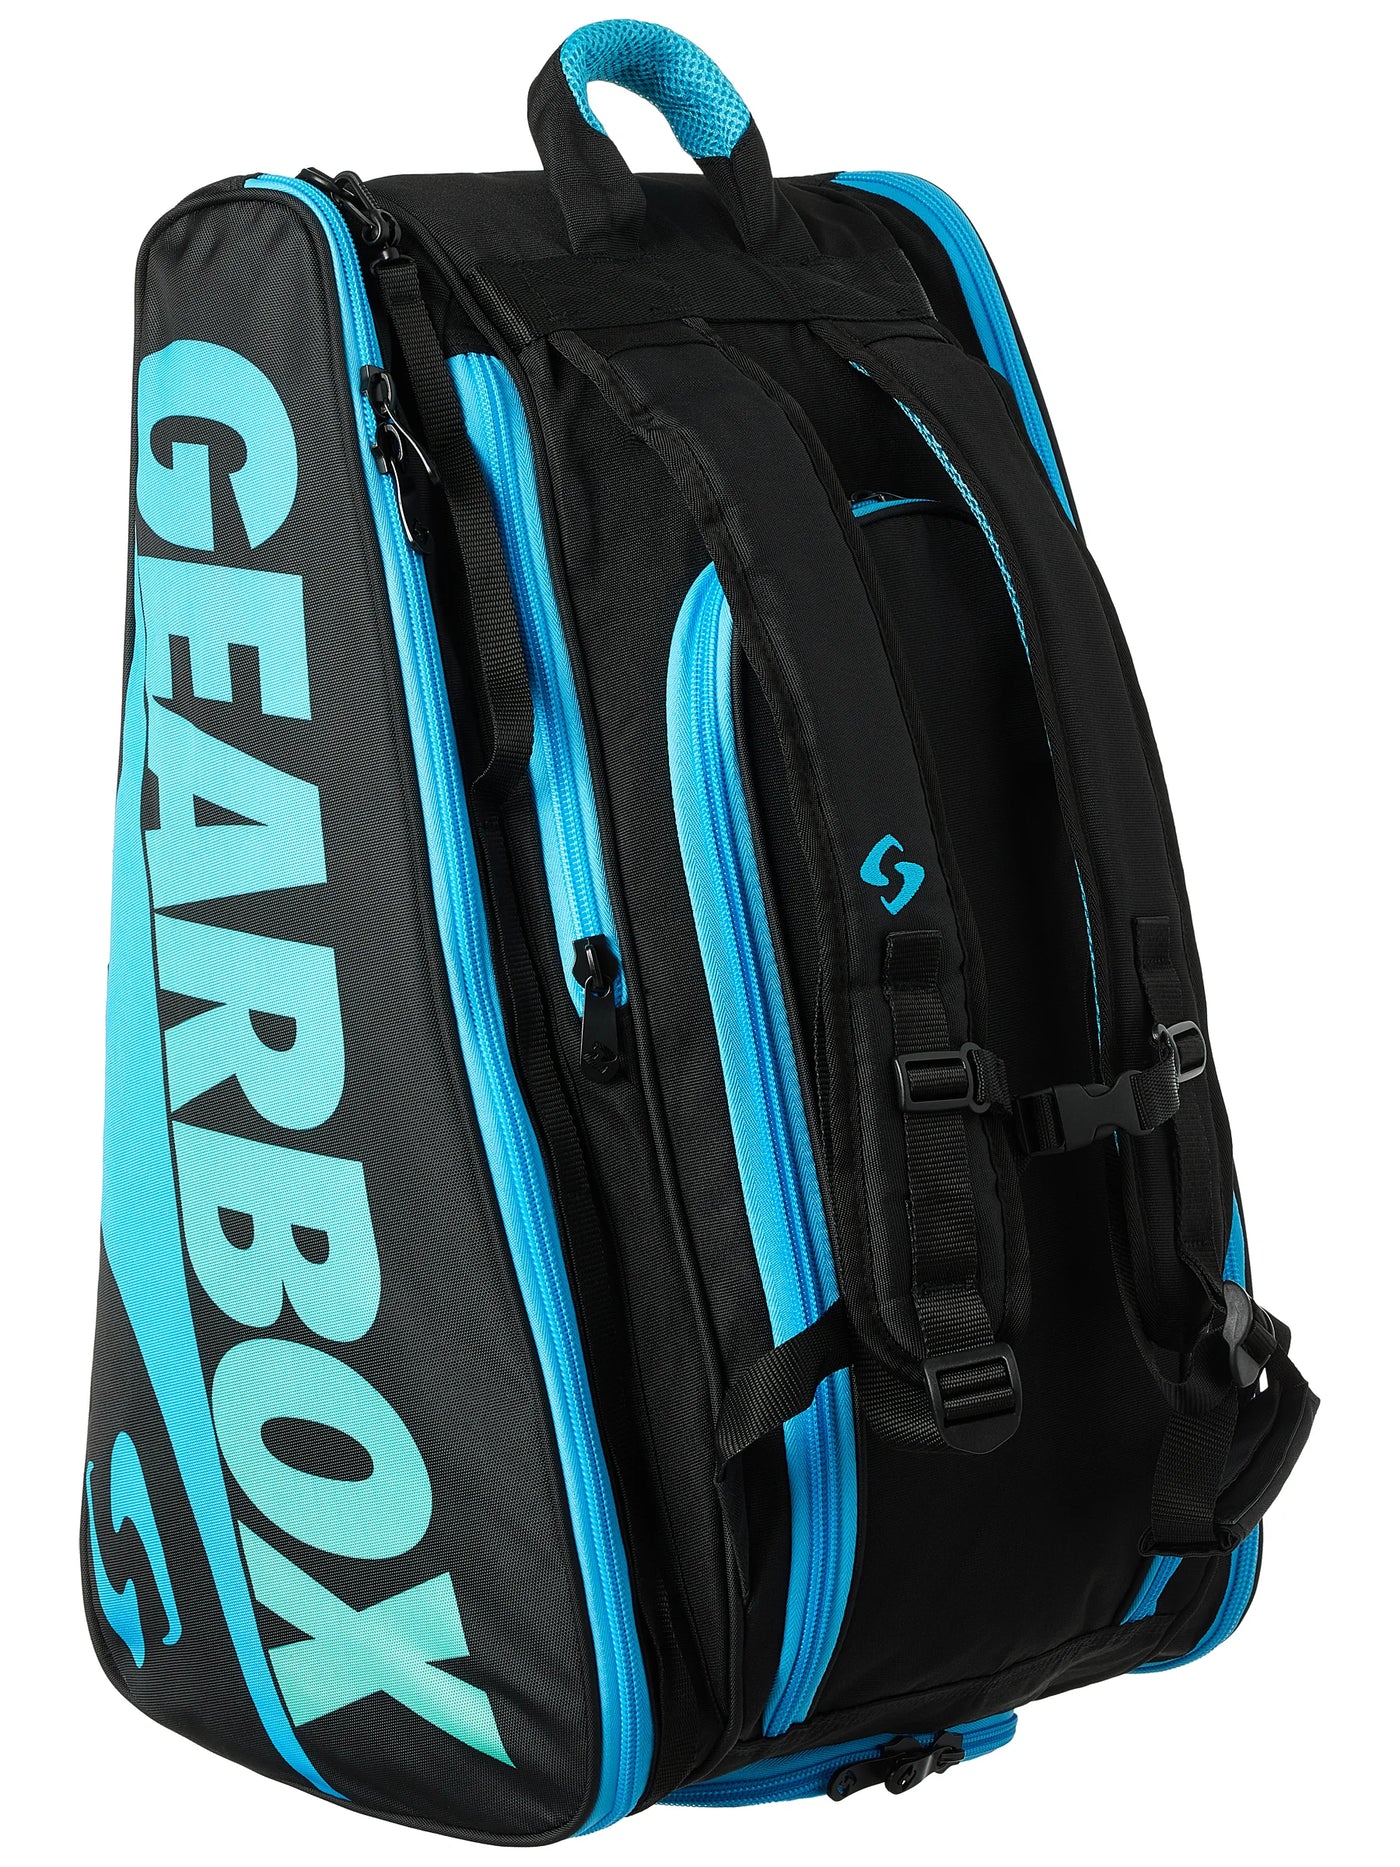 Gearbox Club Bag